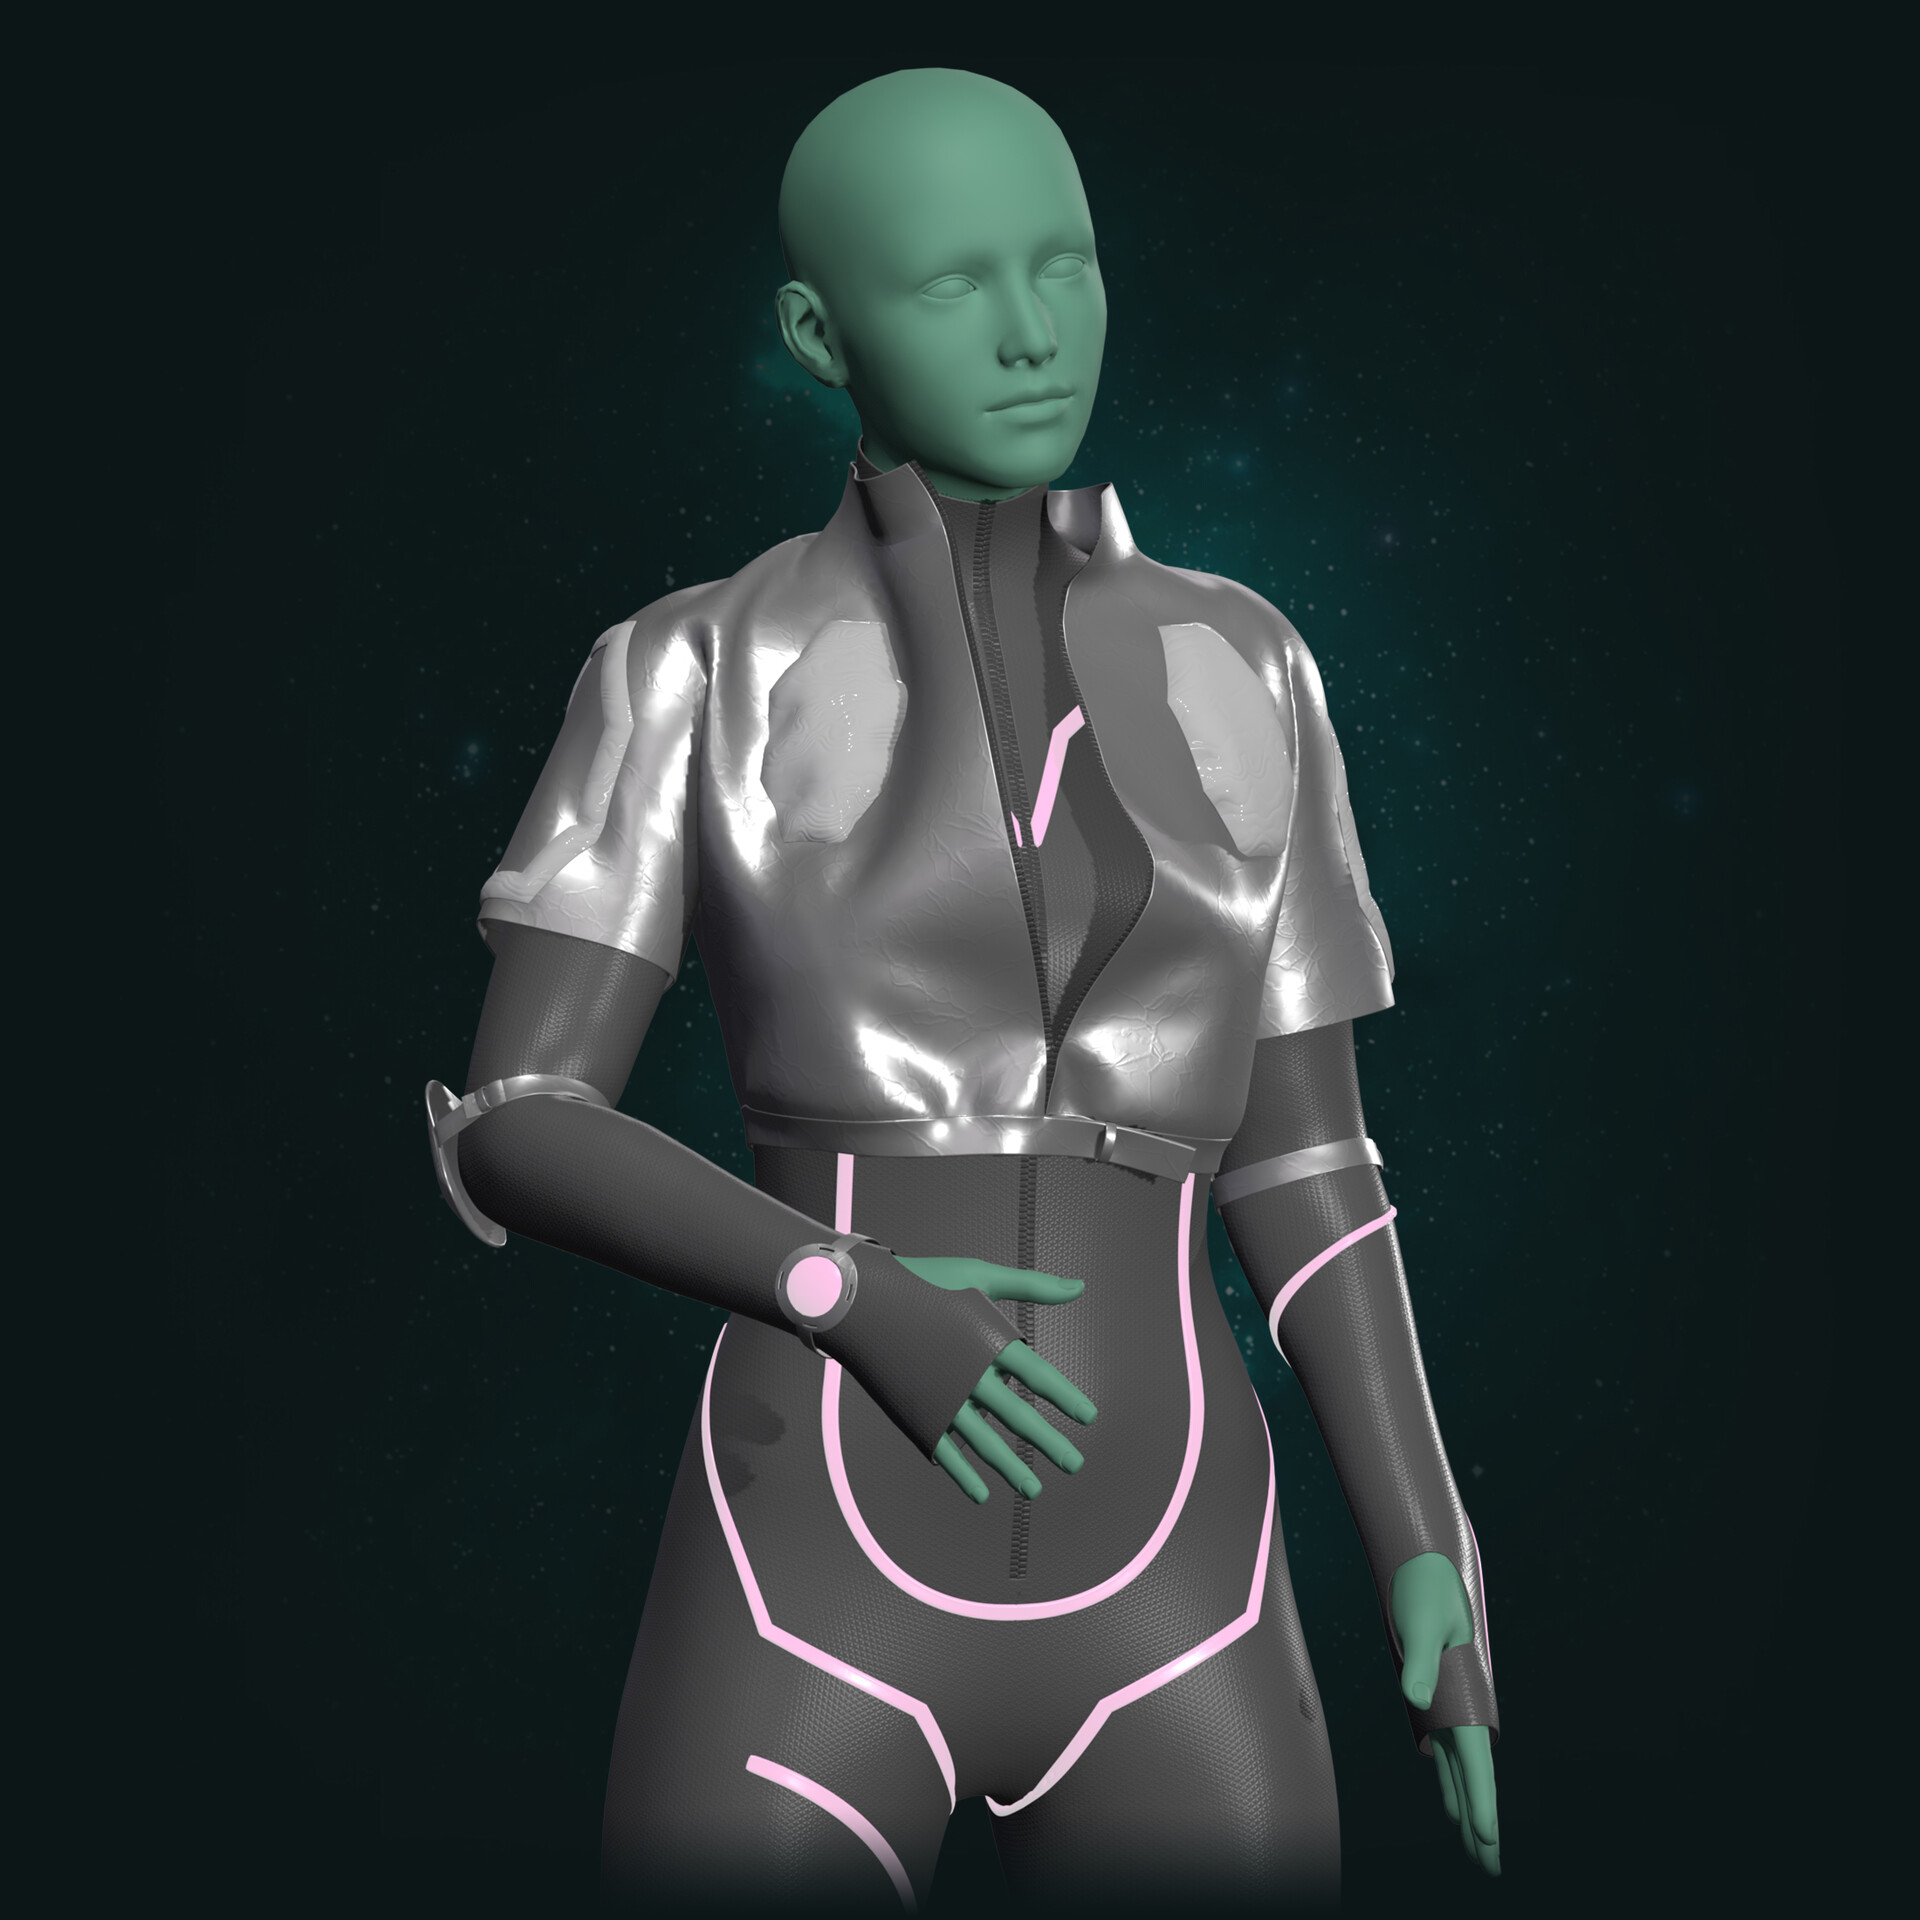 ArtStation - sci-fi female outfit